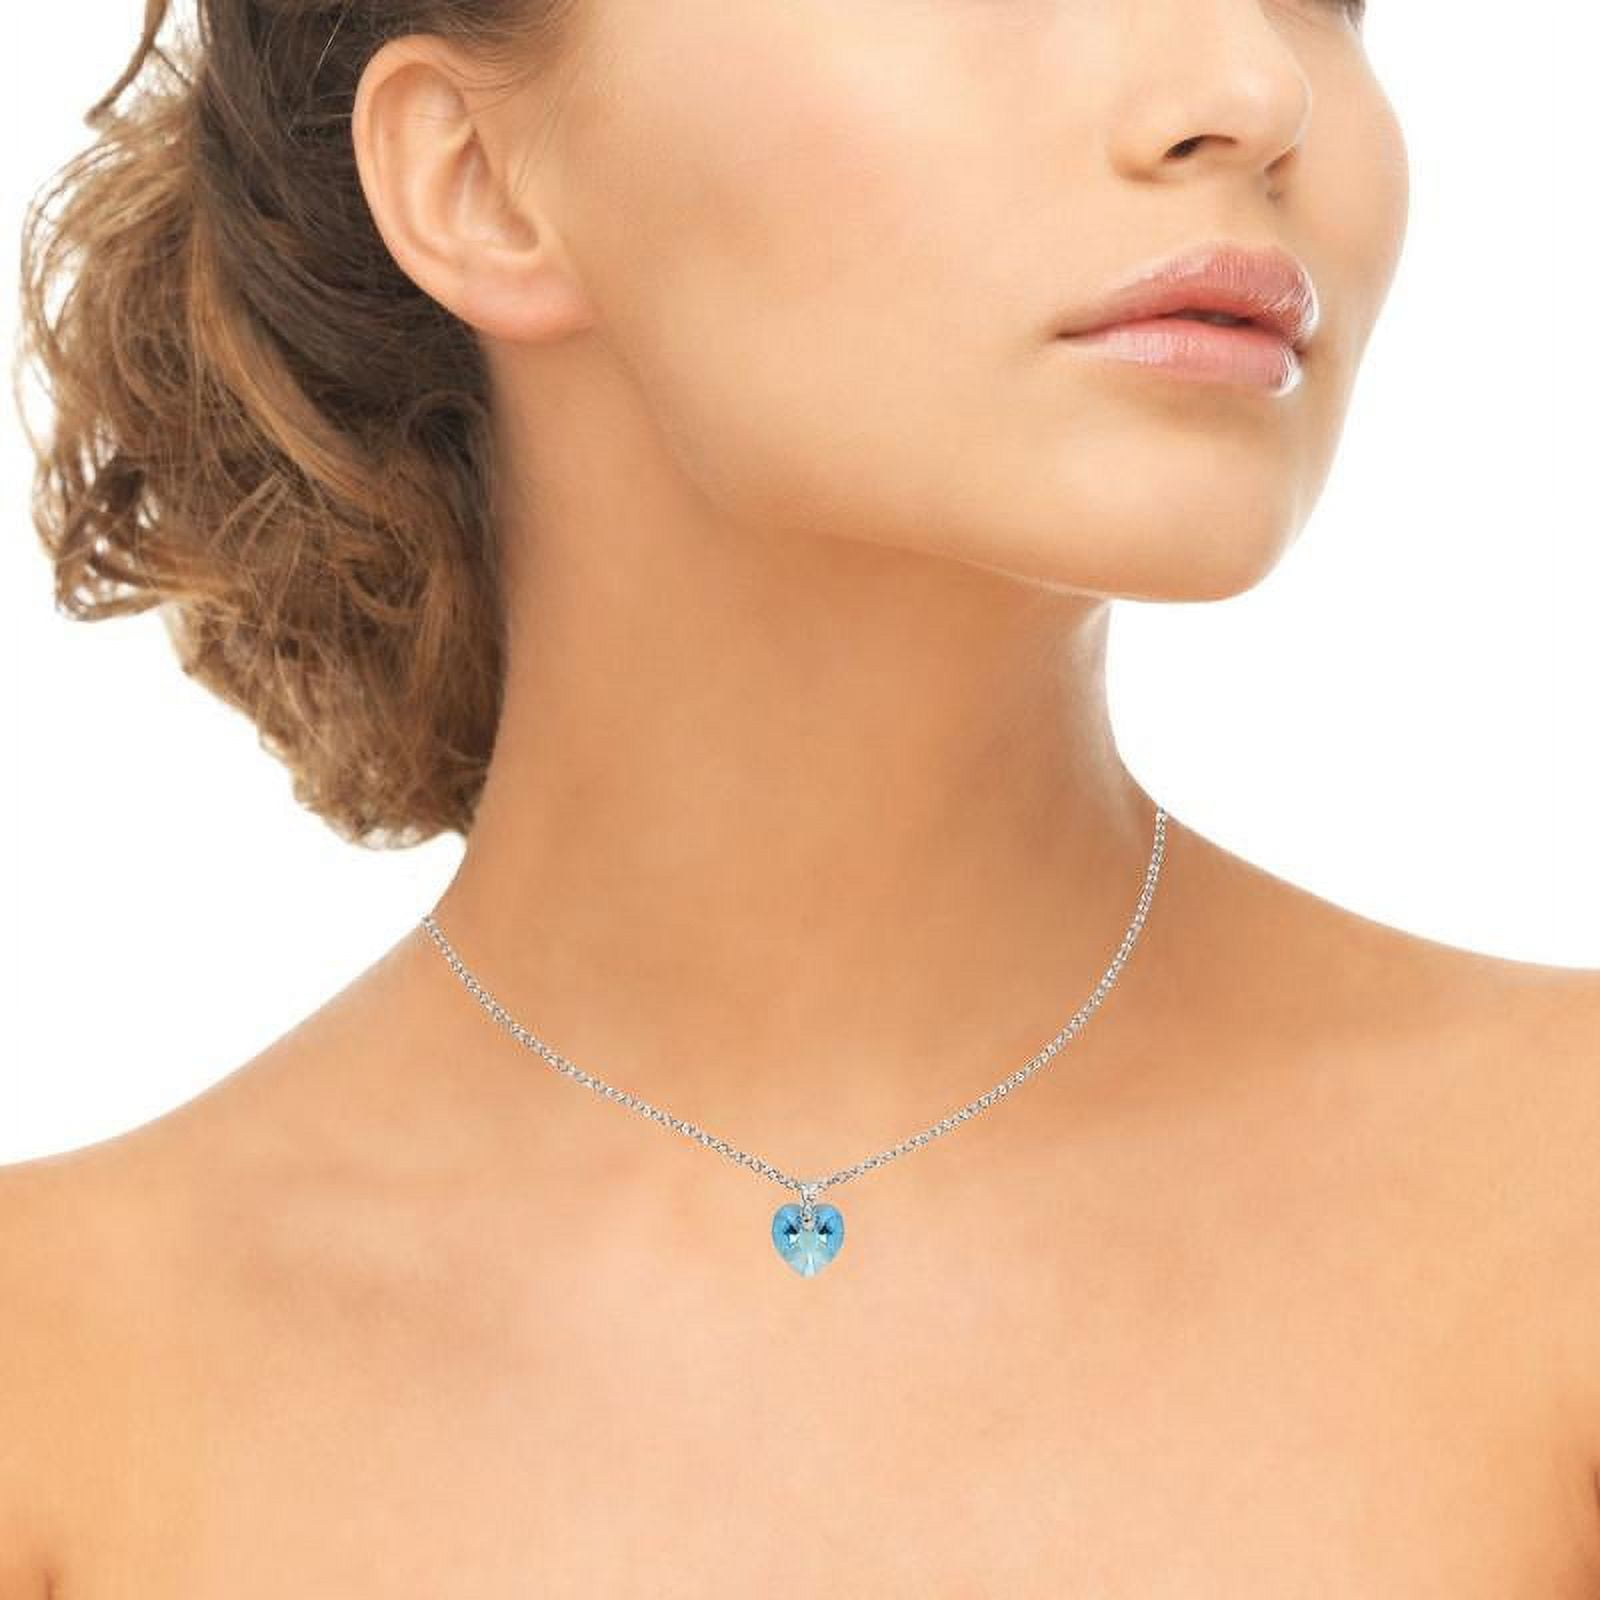 Swarovski Elements Crystal 18mm Love Heart Bermuda Blue Pendant Necklace  NIB | eBay